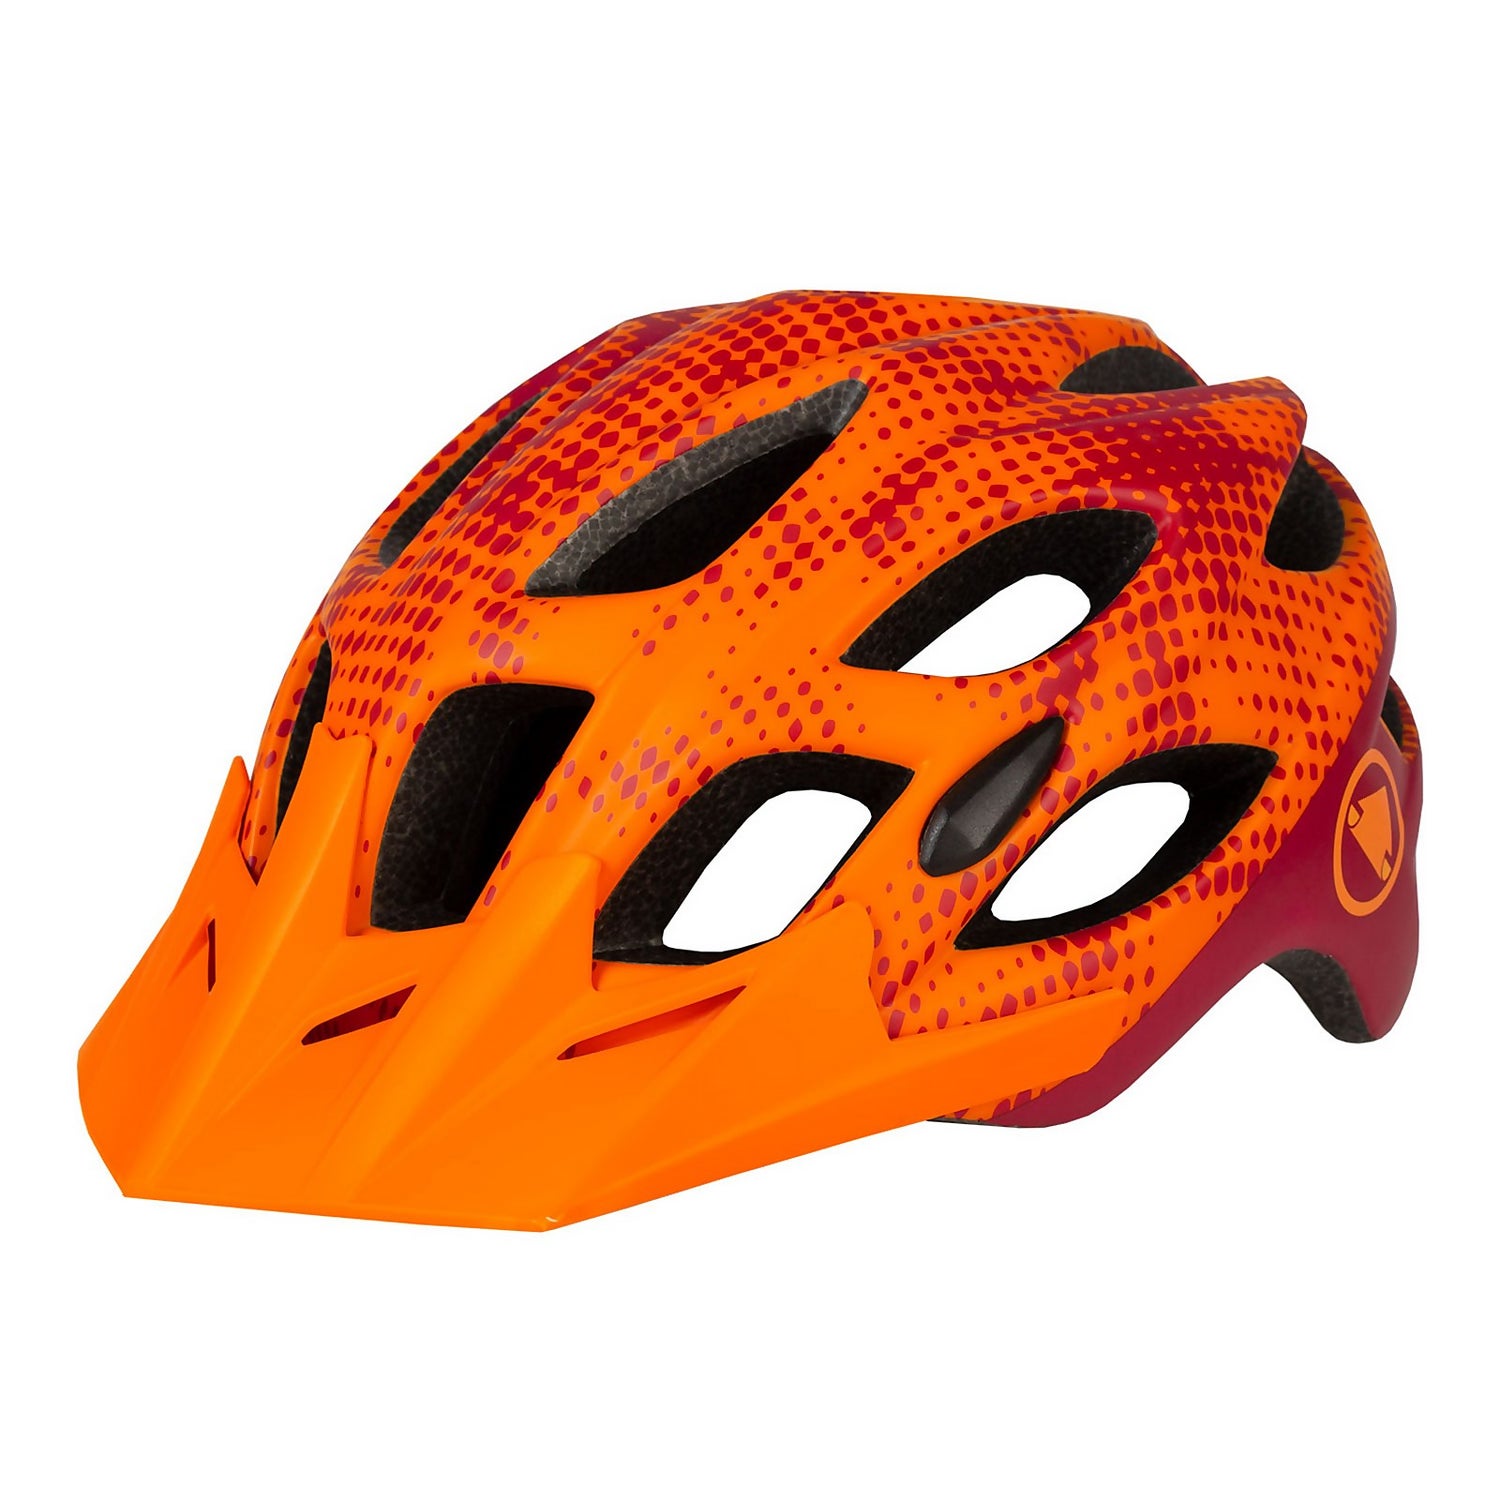 Kids's Hummvee Youth Helmet - Tangerine - One Size